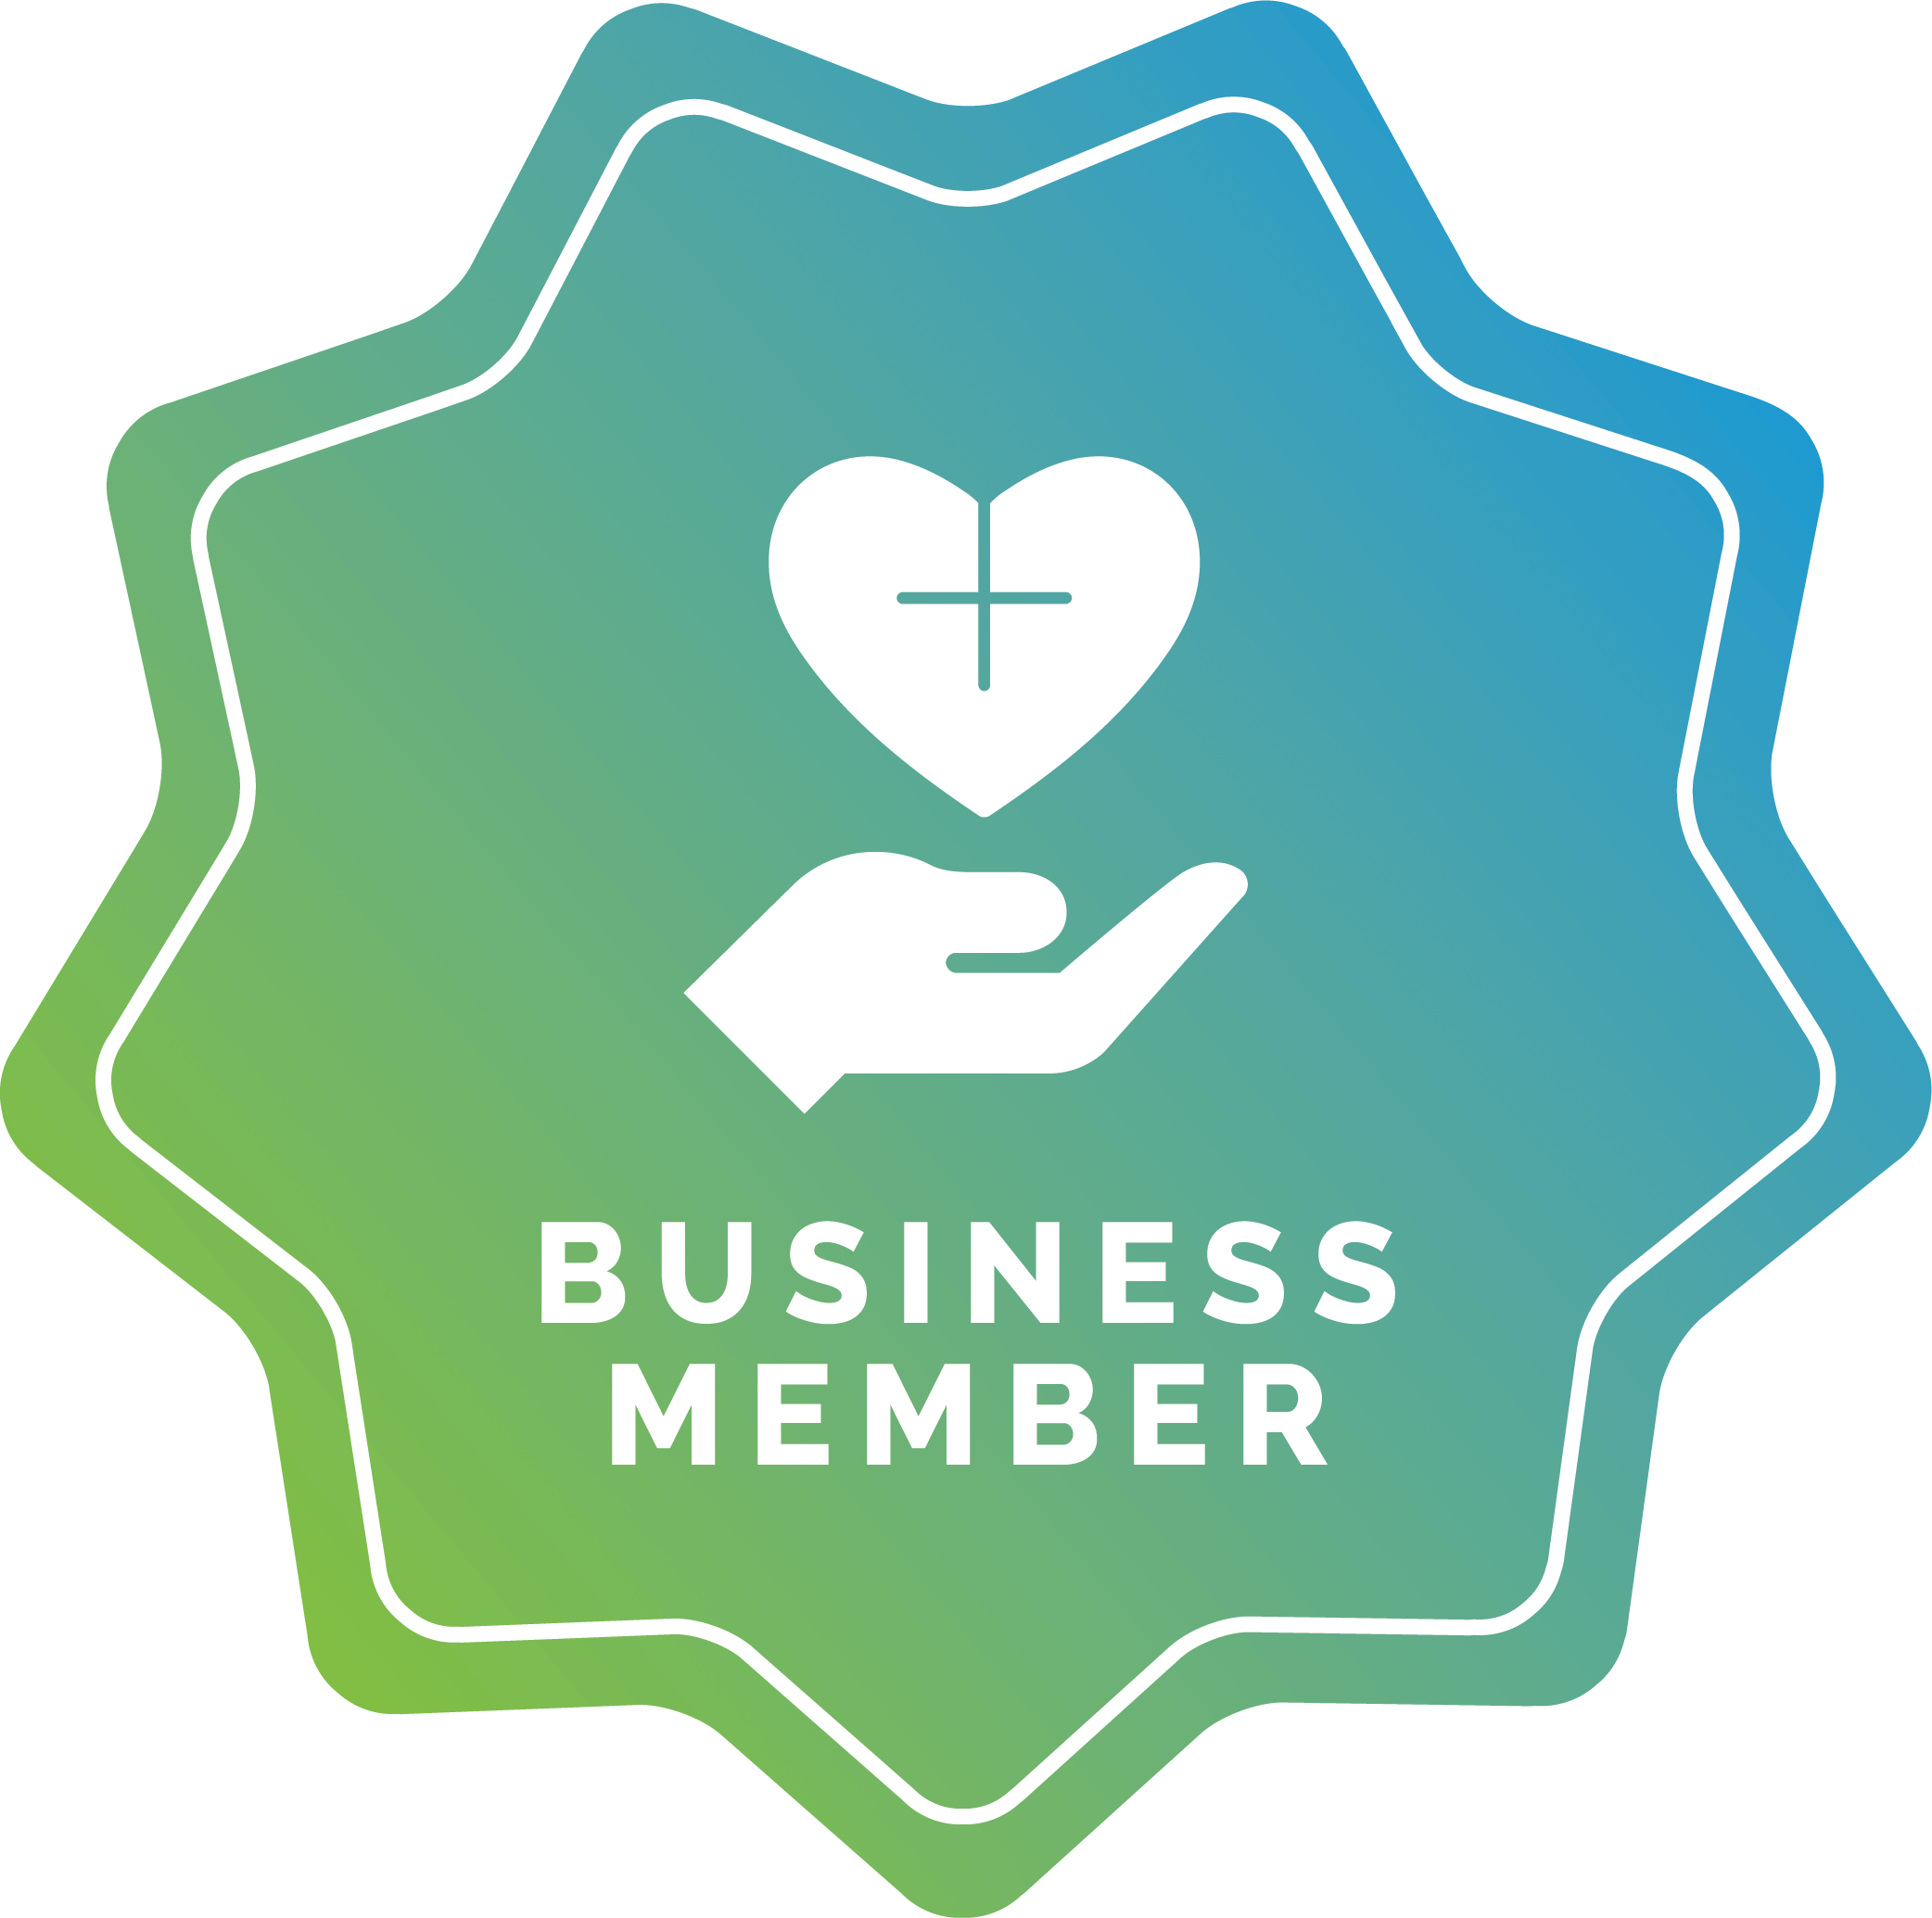 Do More Good Business Member Badge Image